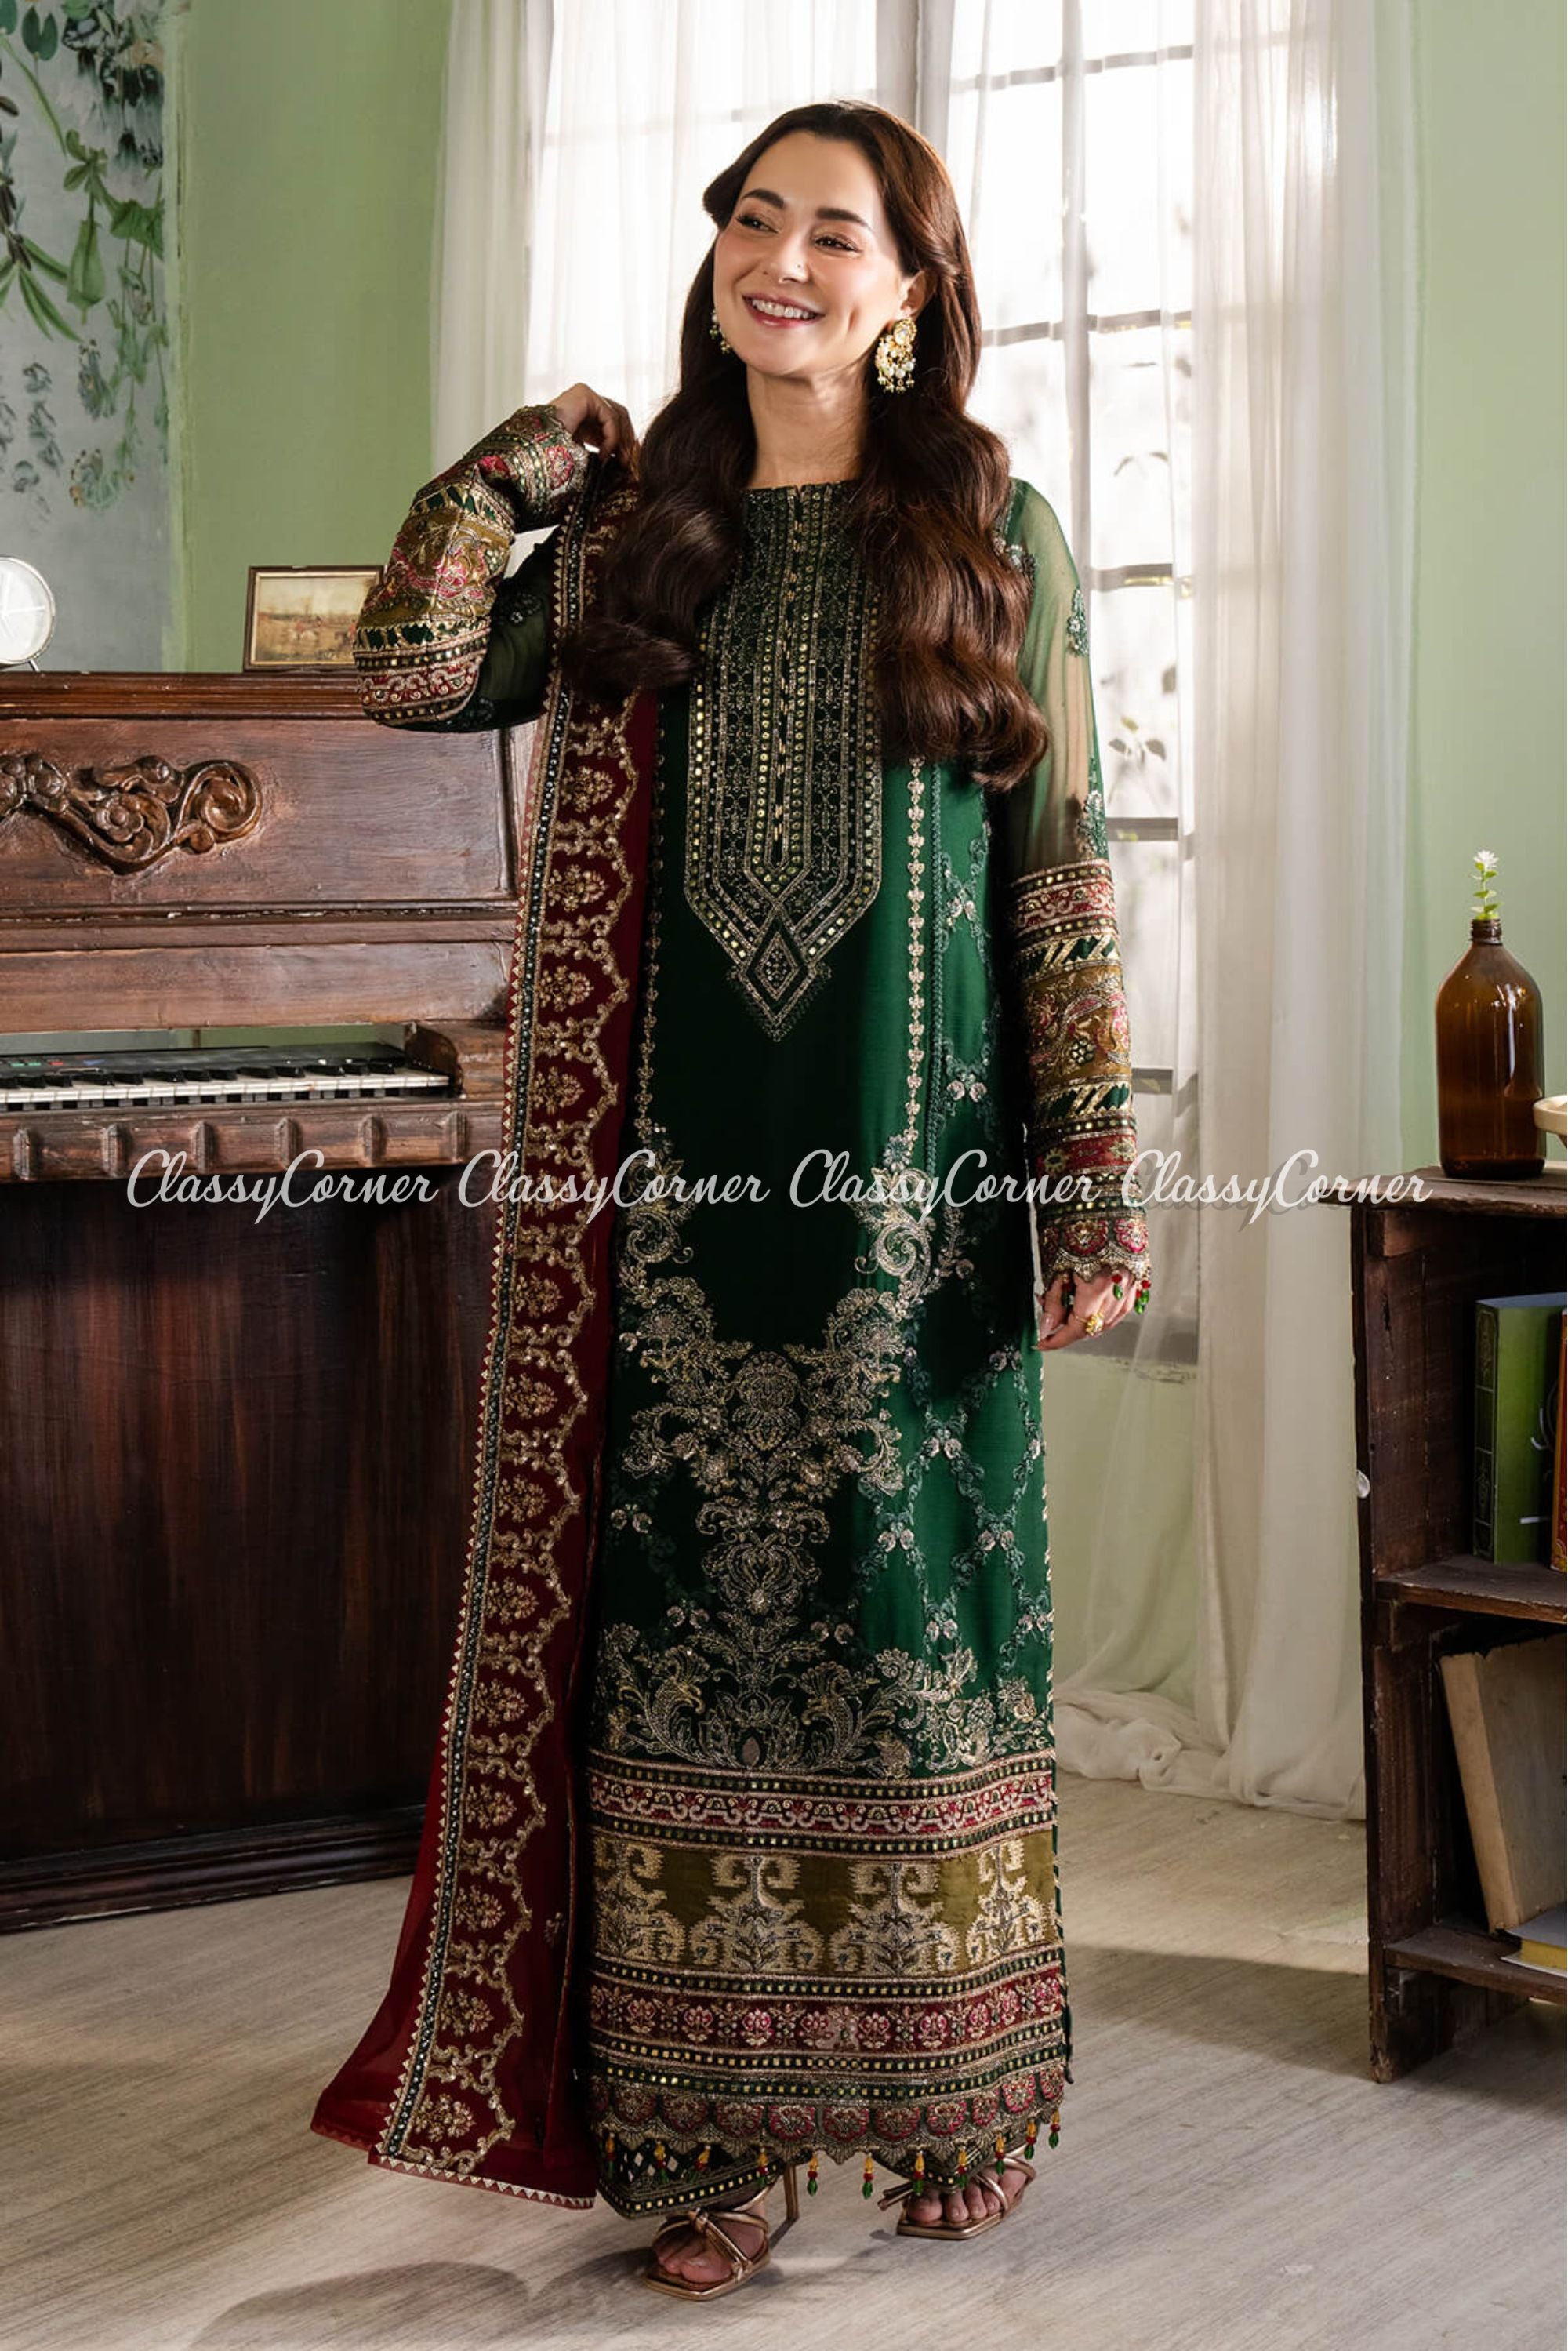 wedding guest outfits pakistani | Mehndi wear outfits